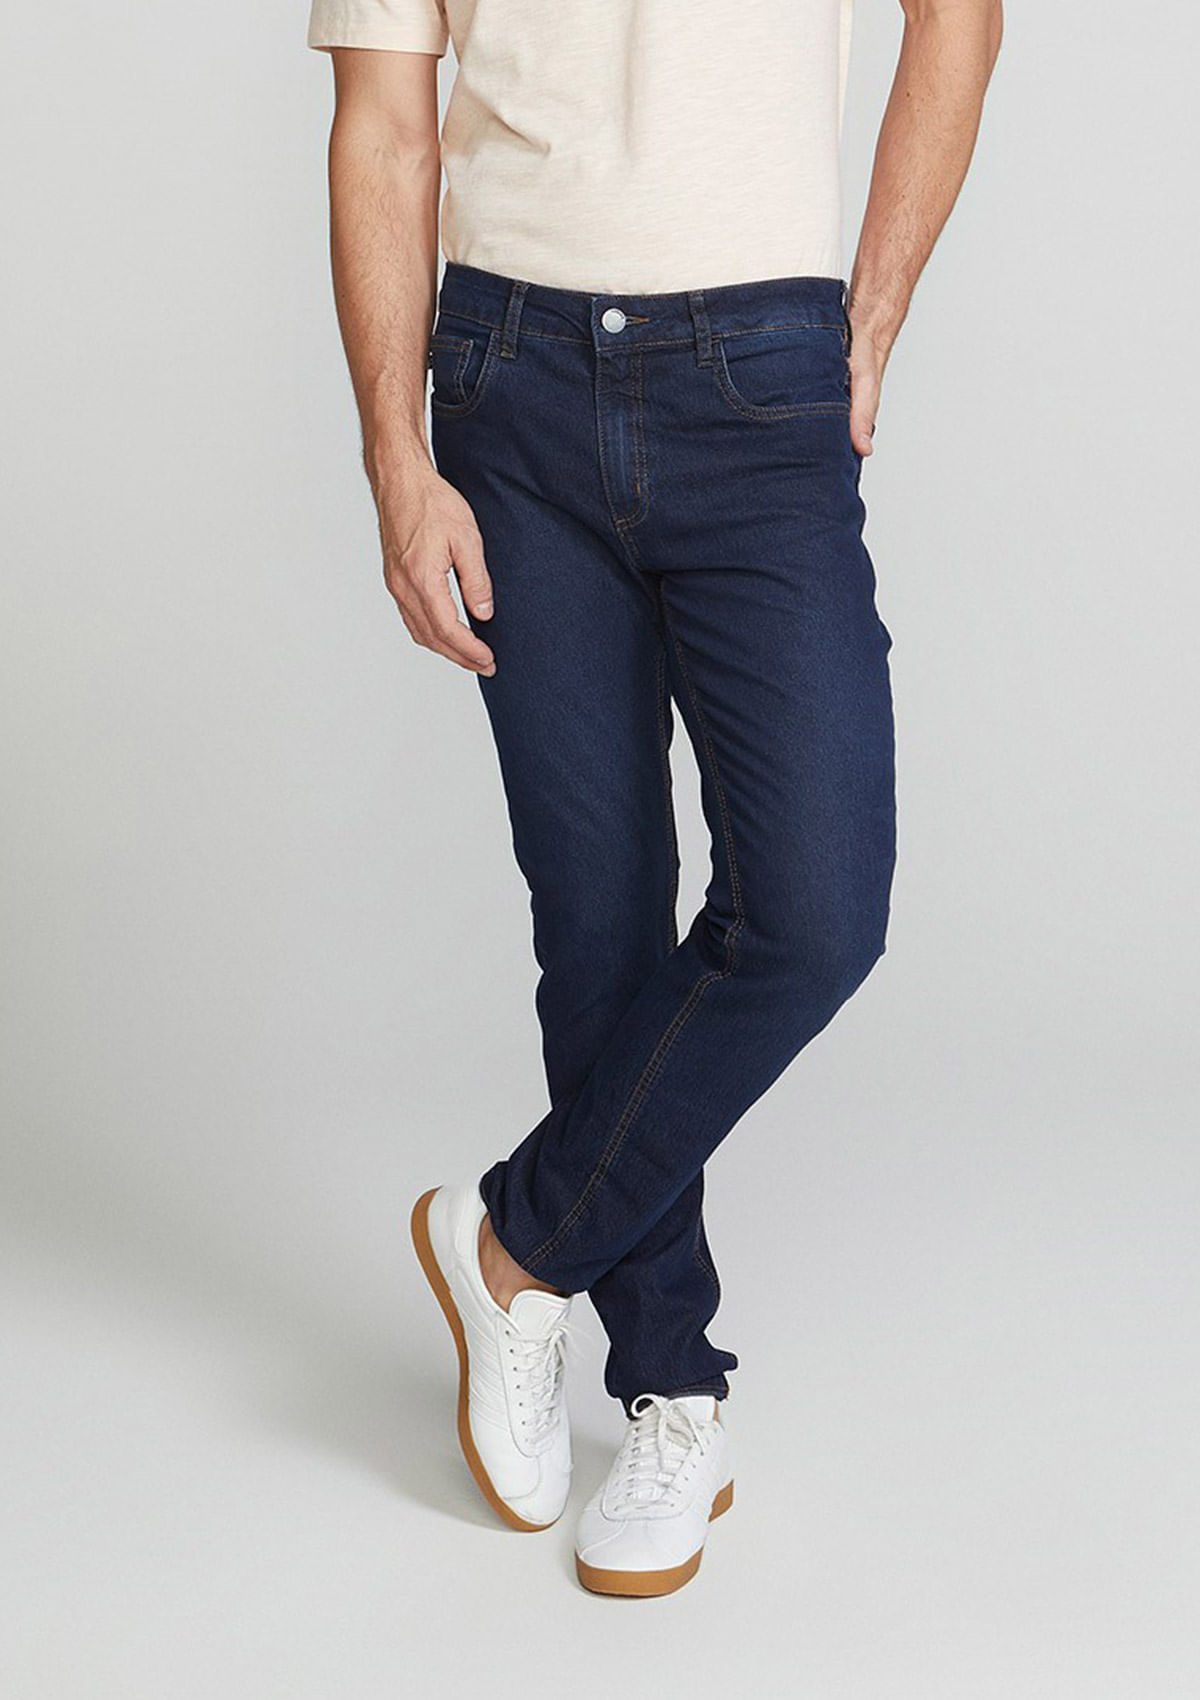 Calça Jeans Masculina com Elastano Skinny - Hering Tam 36